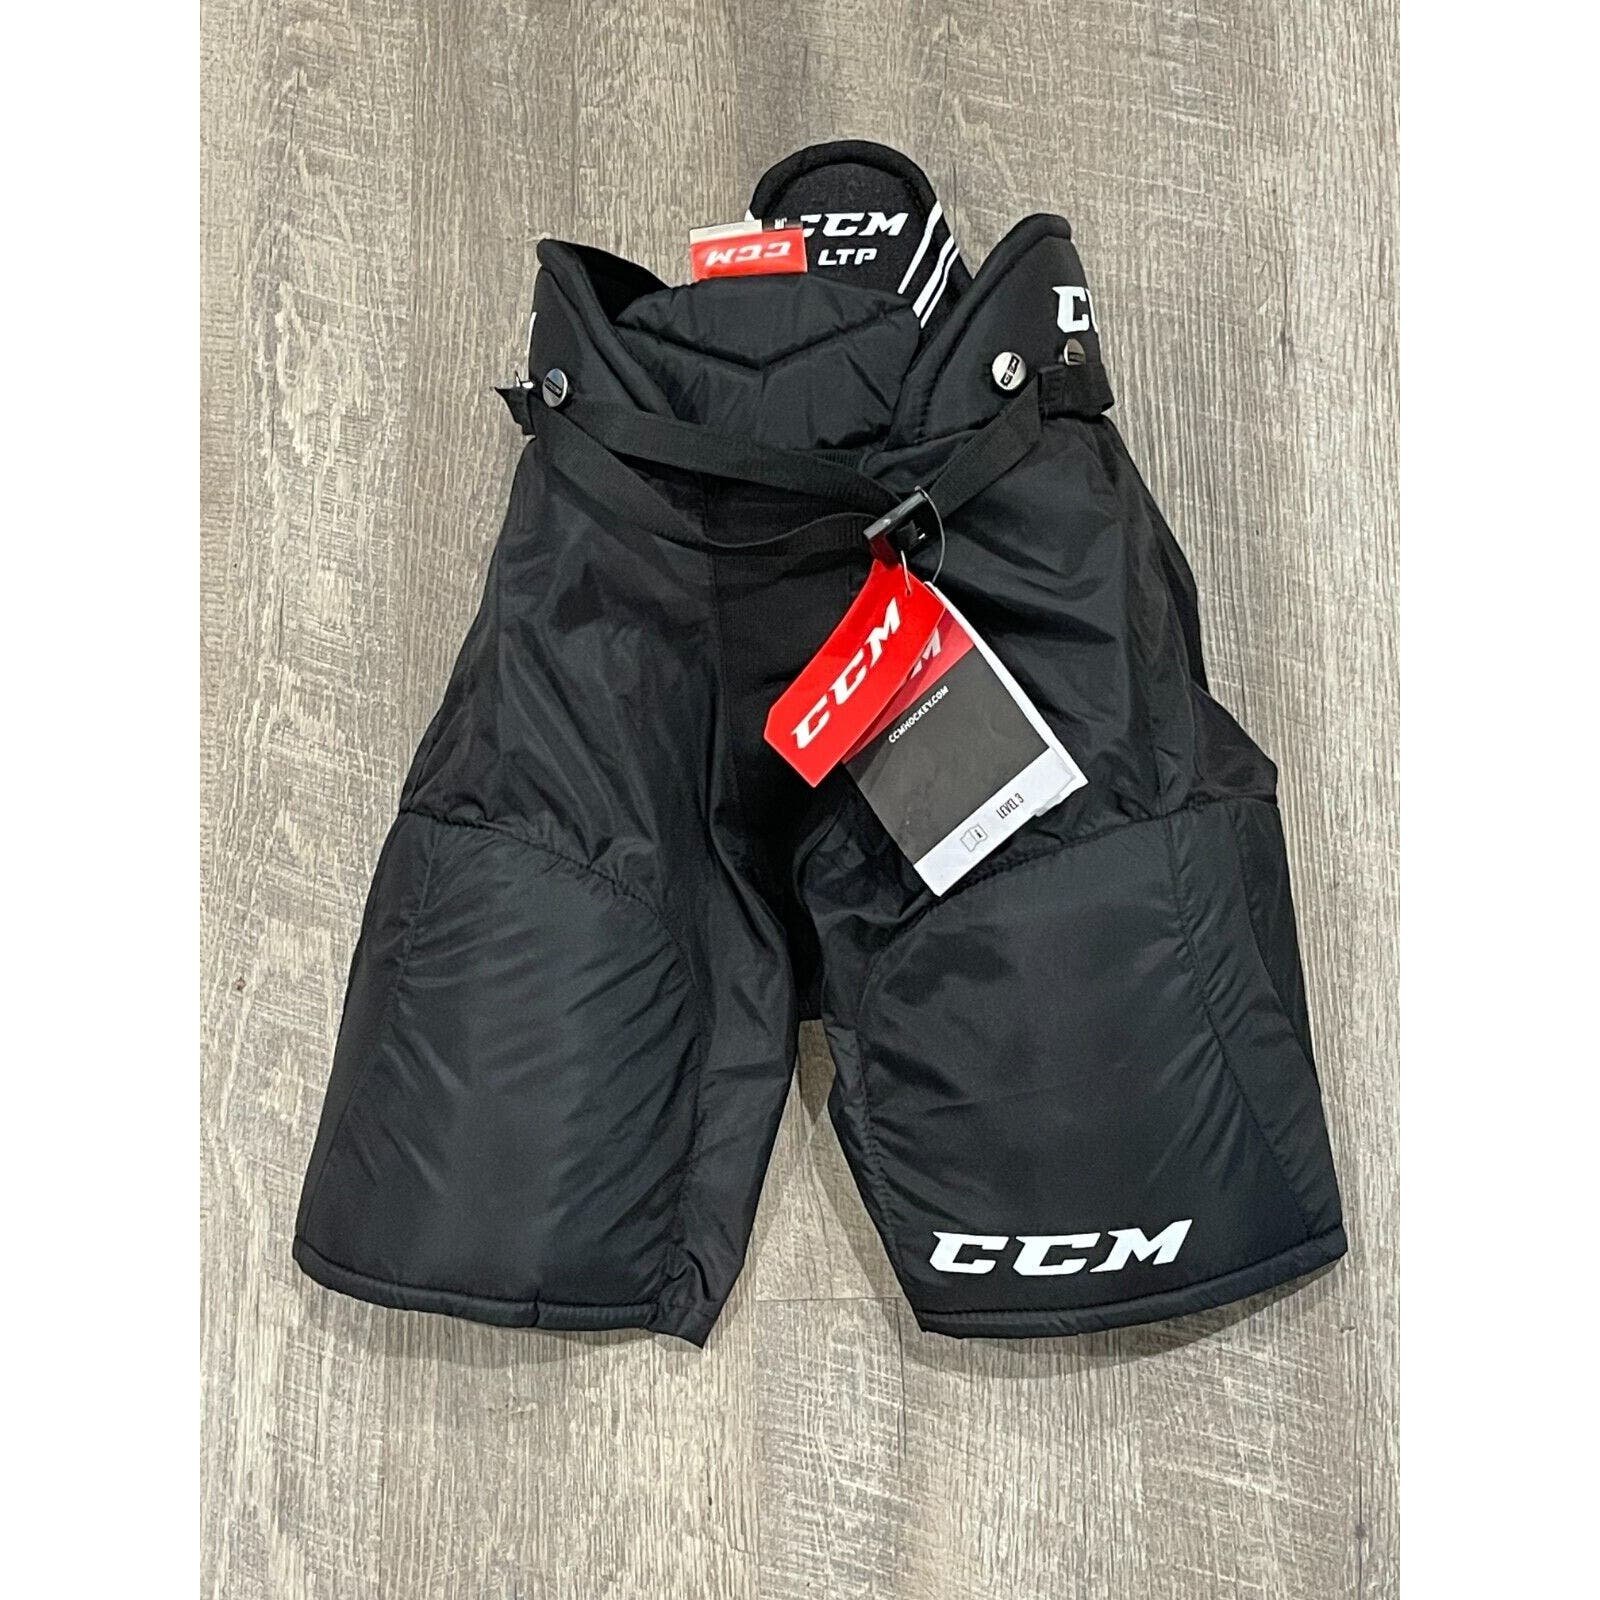 CCM 19F JIA HPLTP Black Ice Hockey Padded Pants JUNIOR - Medium NWT 815g8LEpE